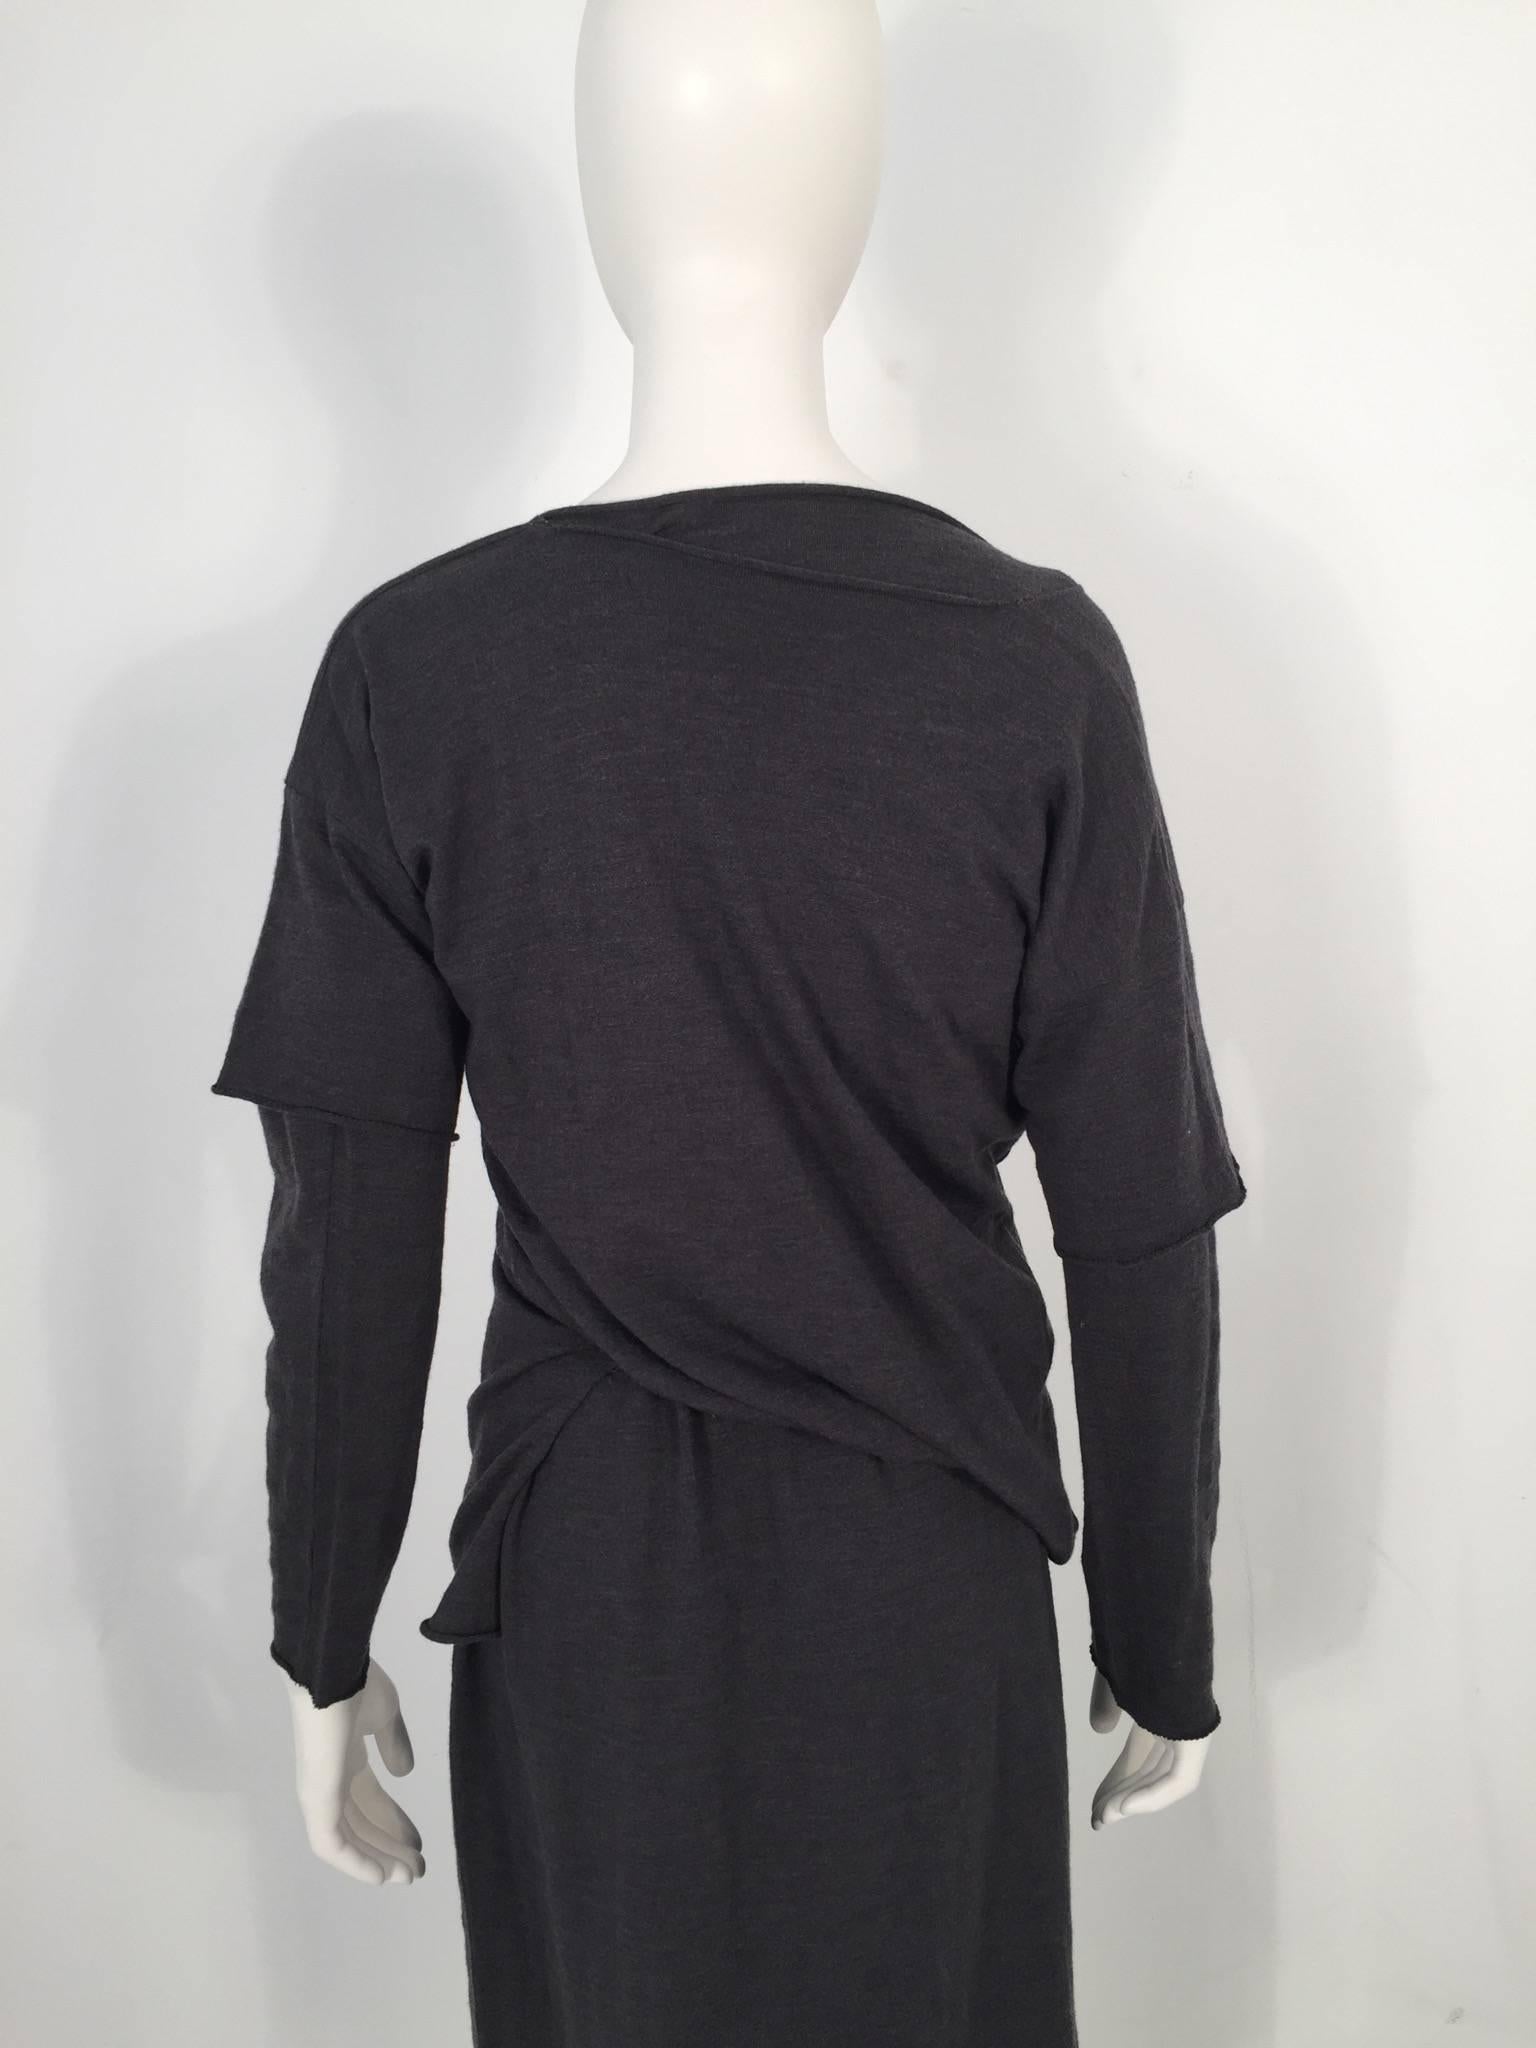 Comme des Garcons tricot Iconic Deconstructed Dress For Sale 1